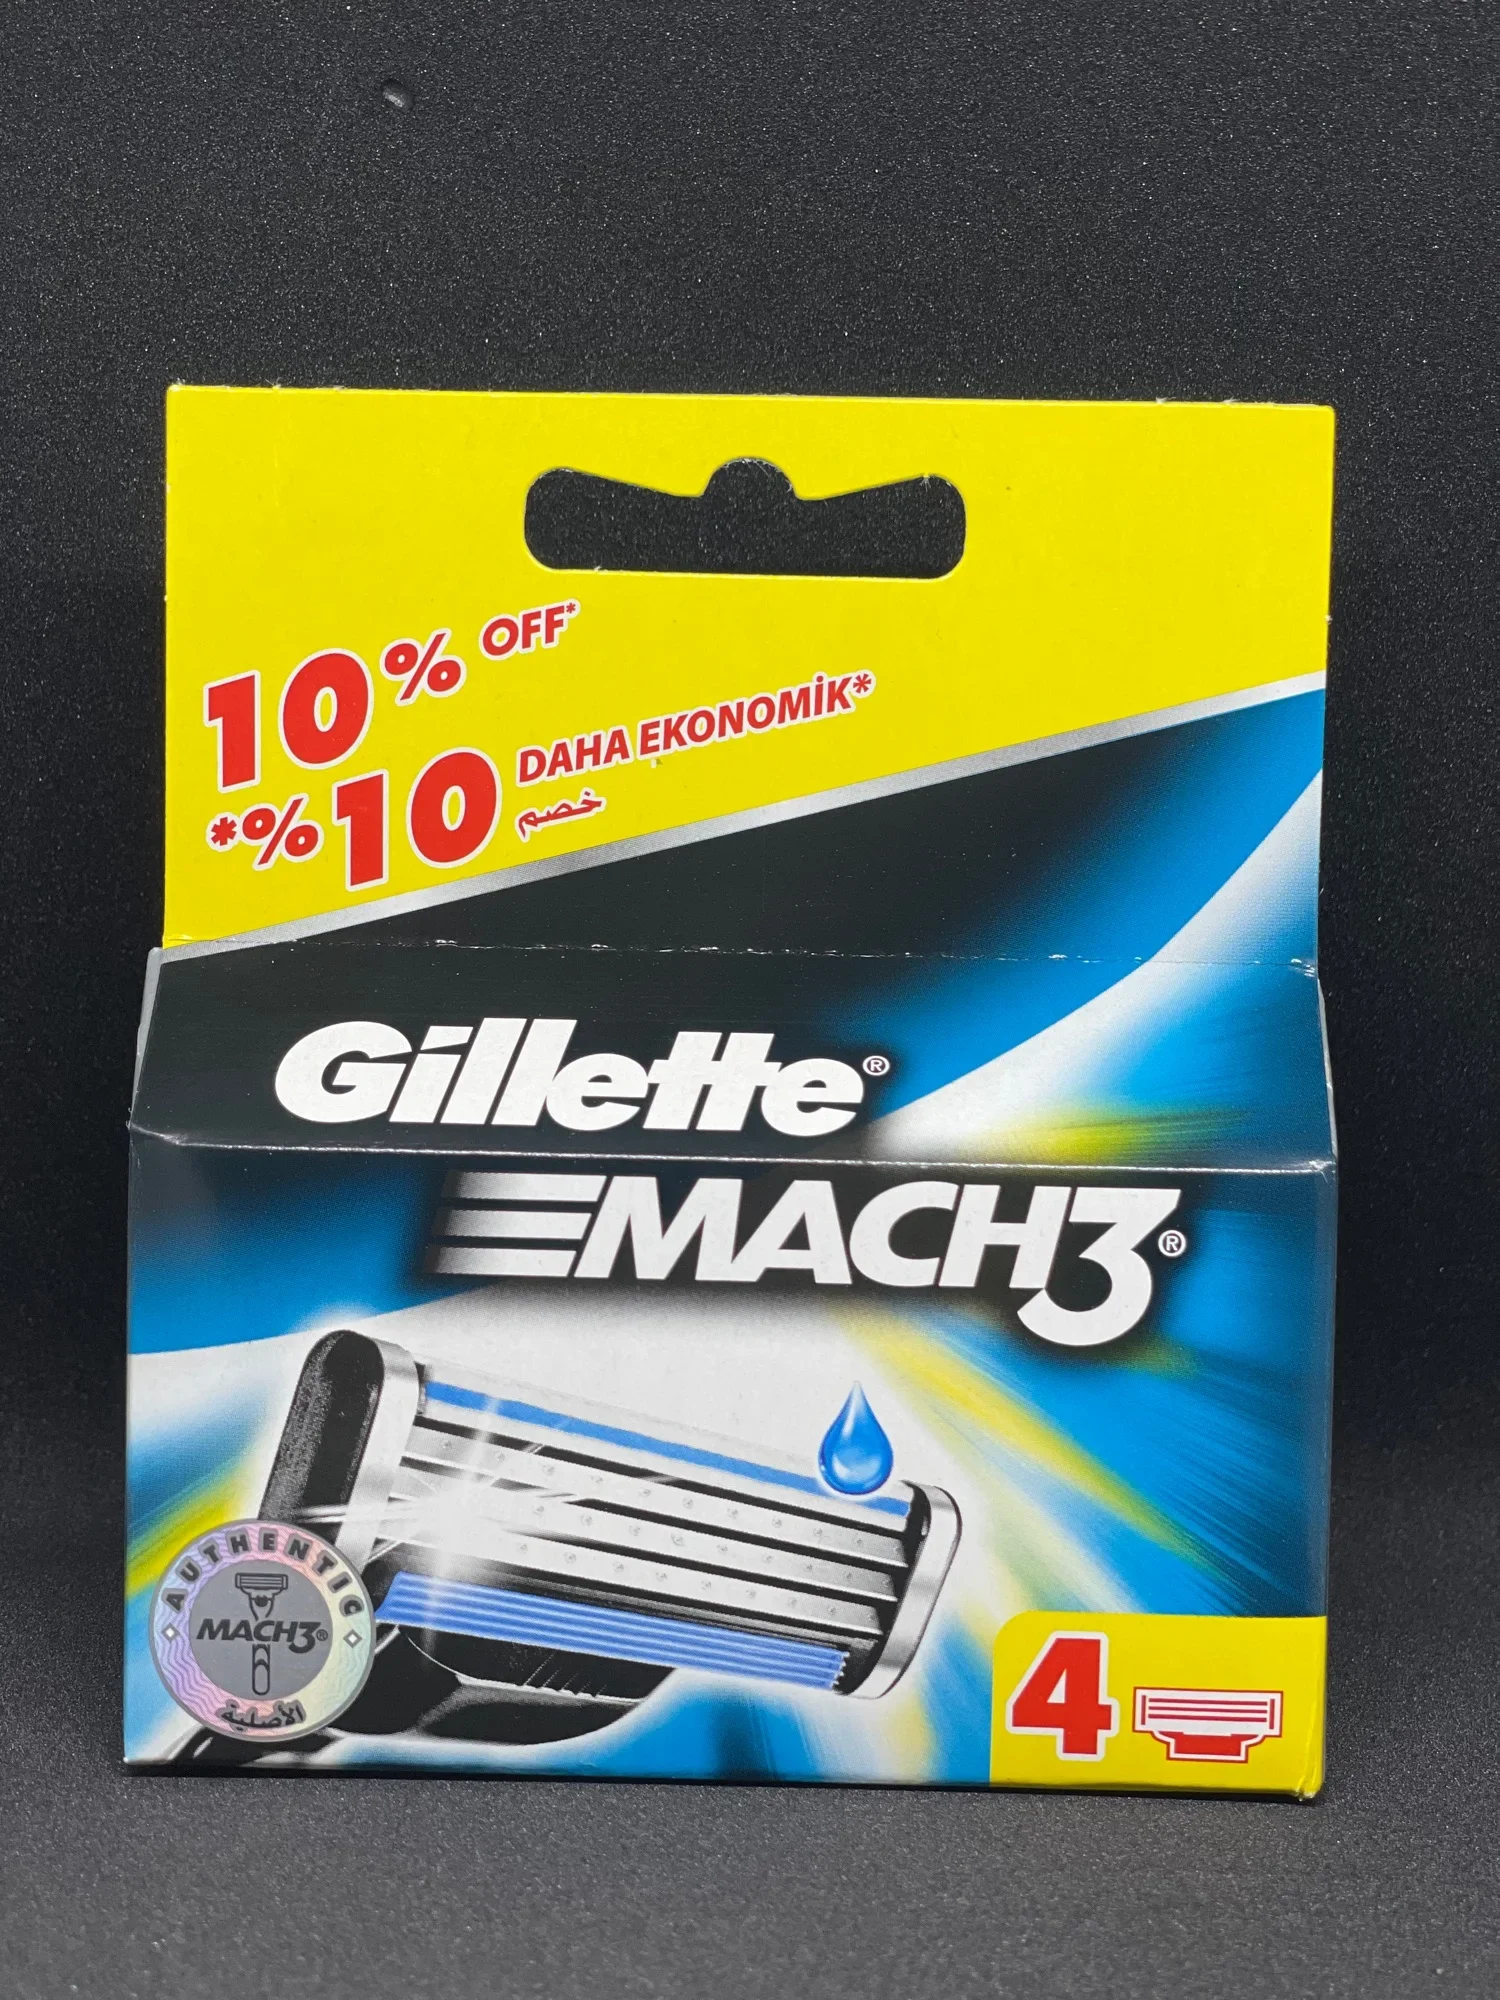 Gillette Mach 3( 4s cartridge)